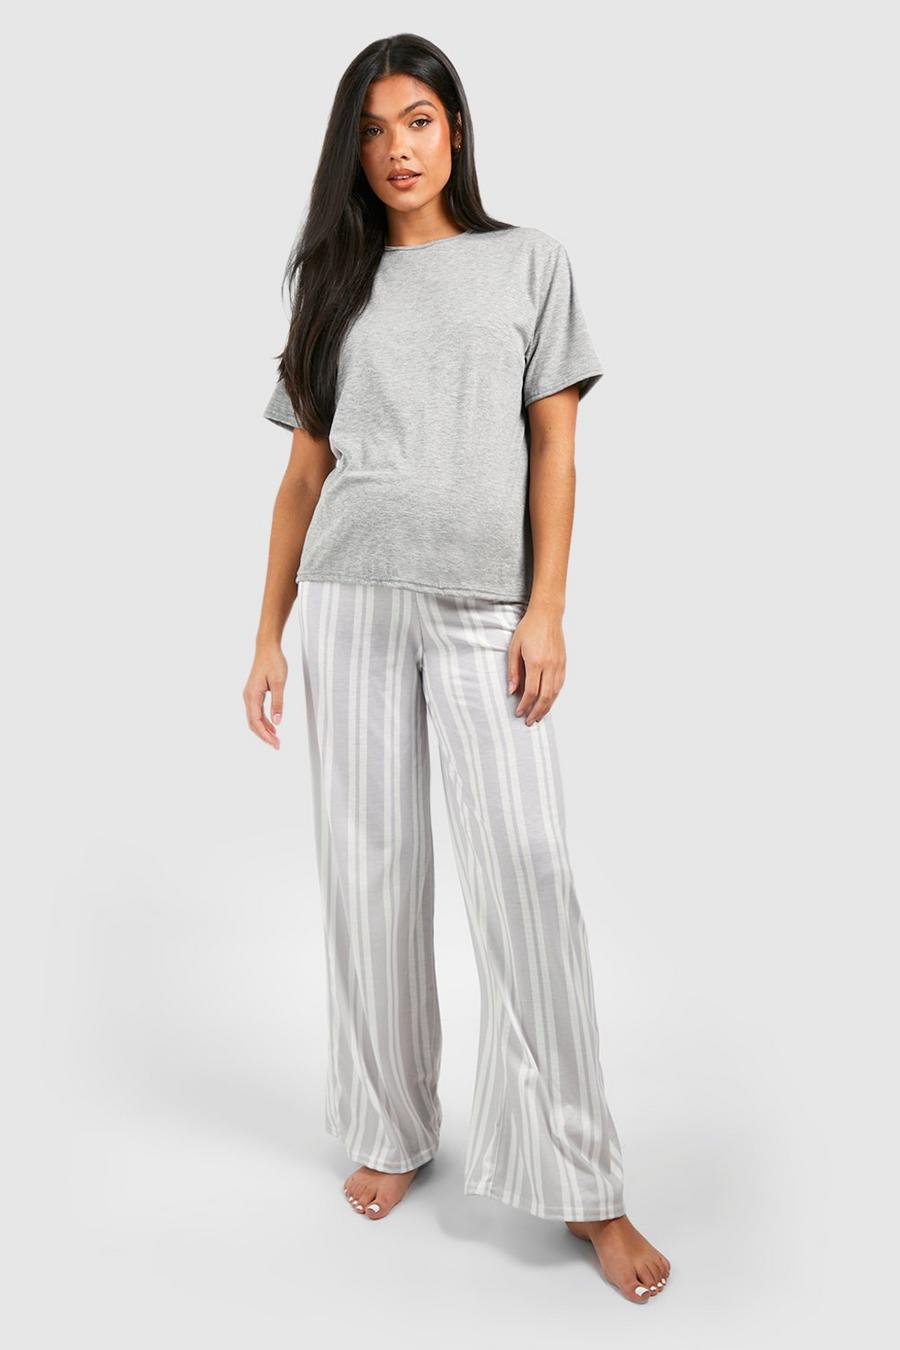 Grey marl Maternity Stripe Pyjama Set